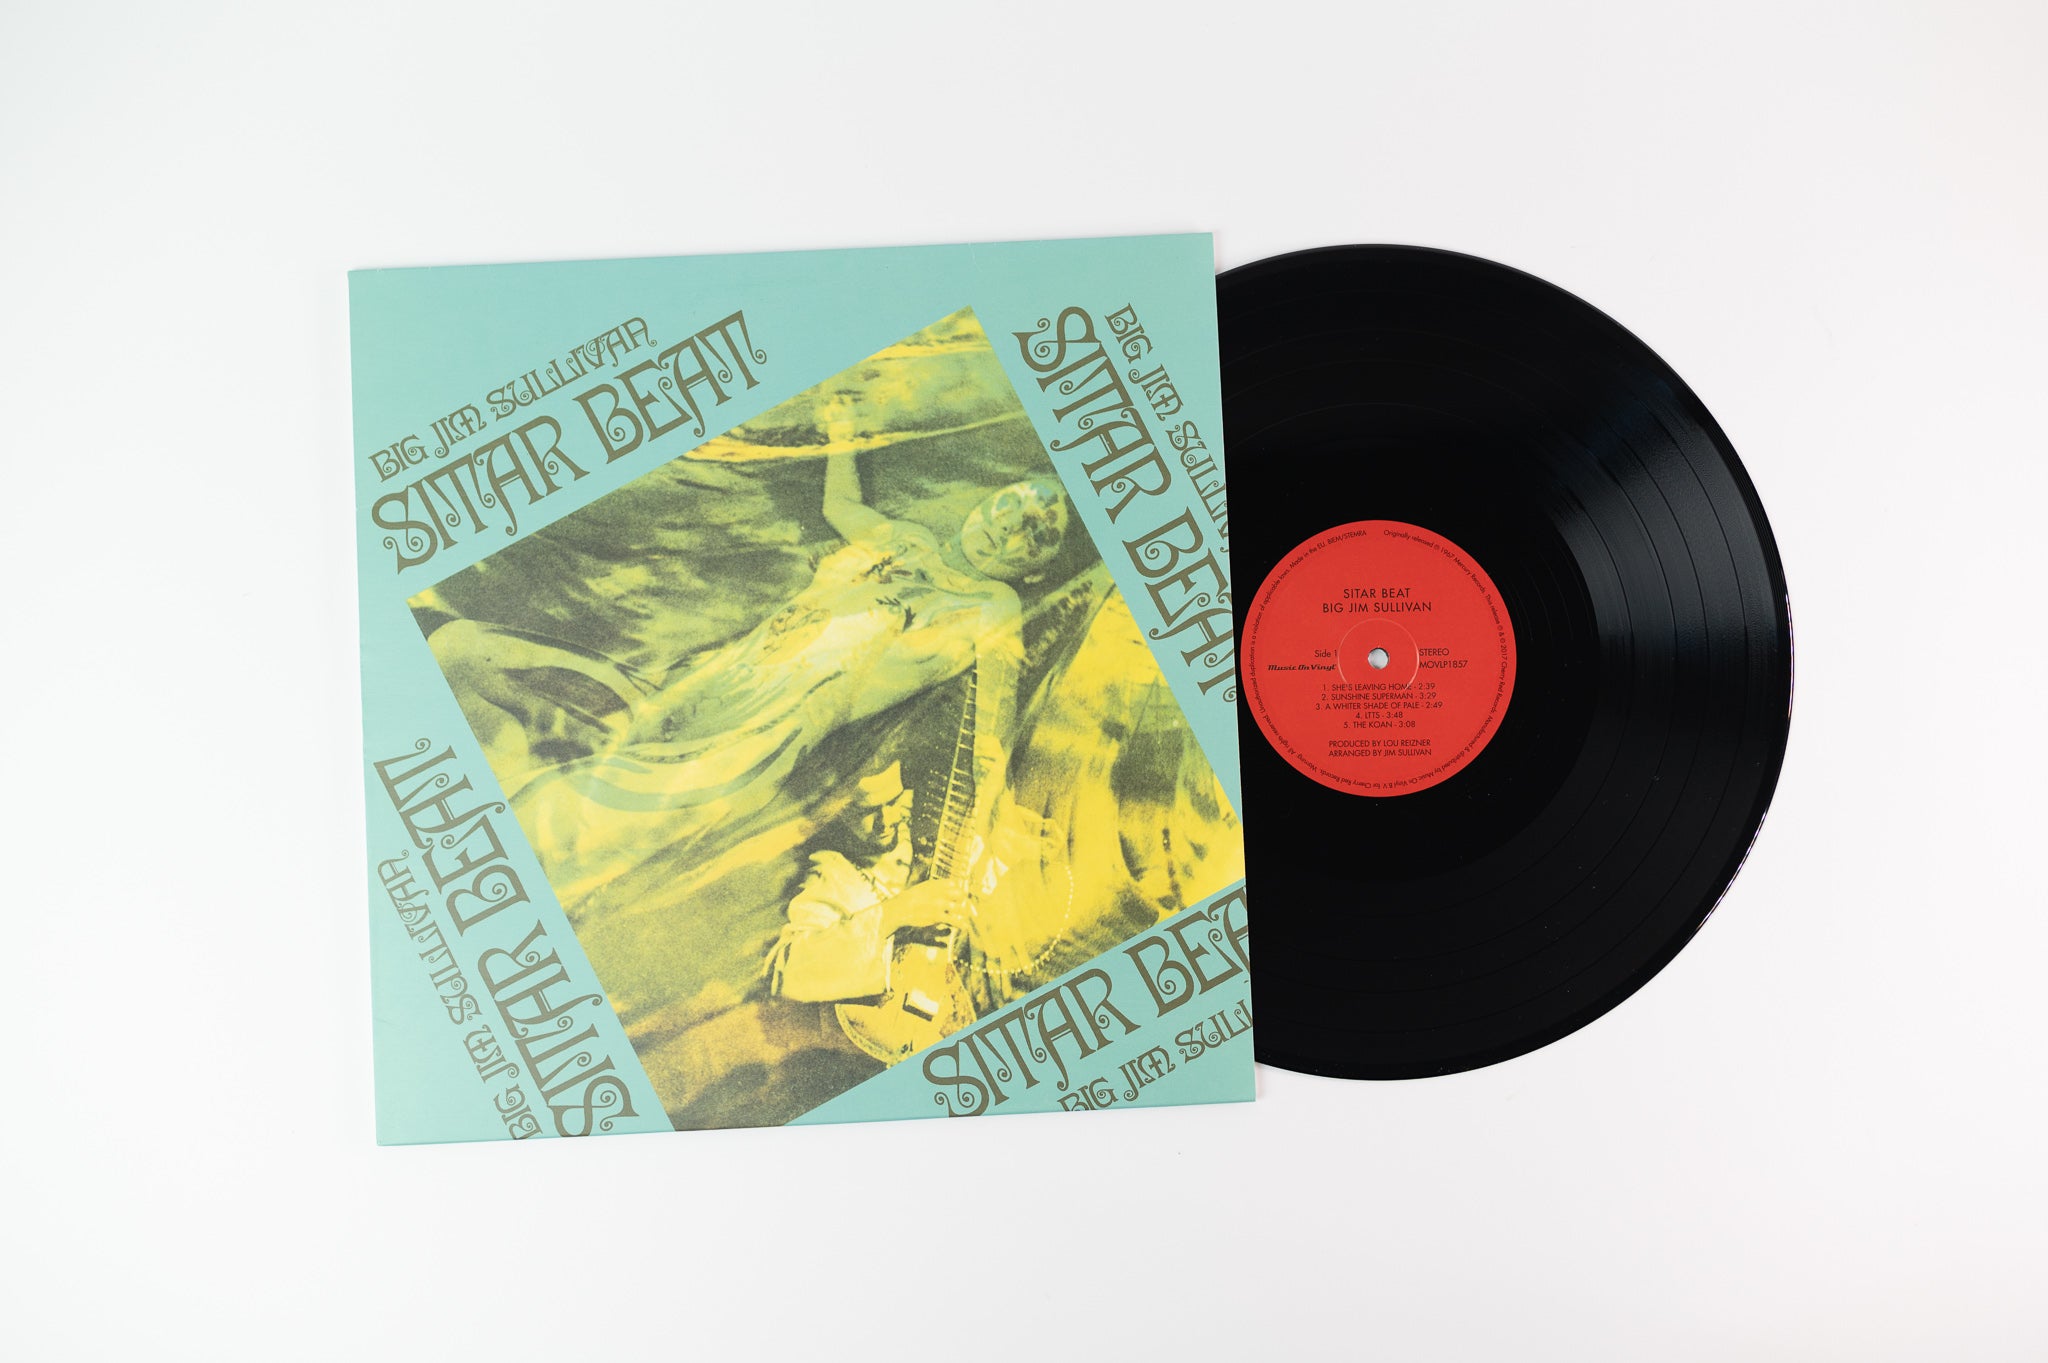 Big Jim Sullivan - Sitar Beat on Music On Vinyl